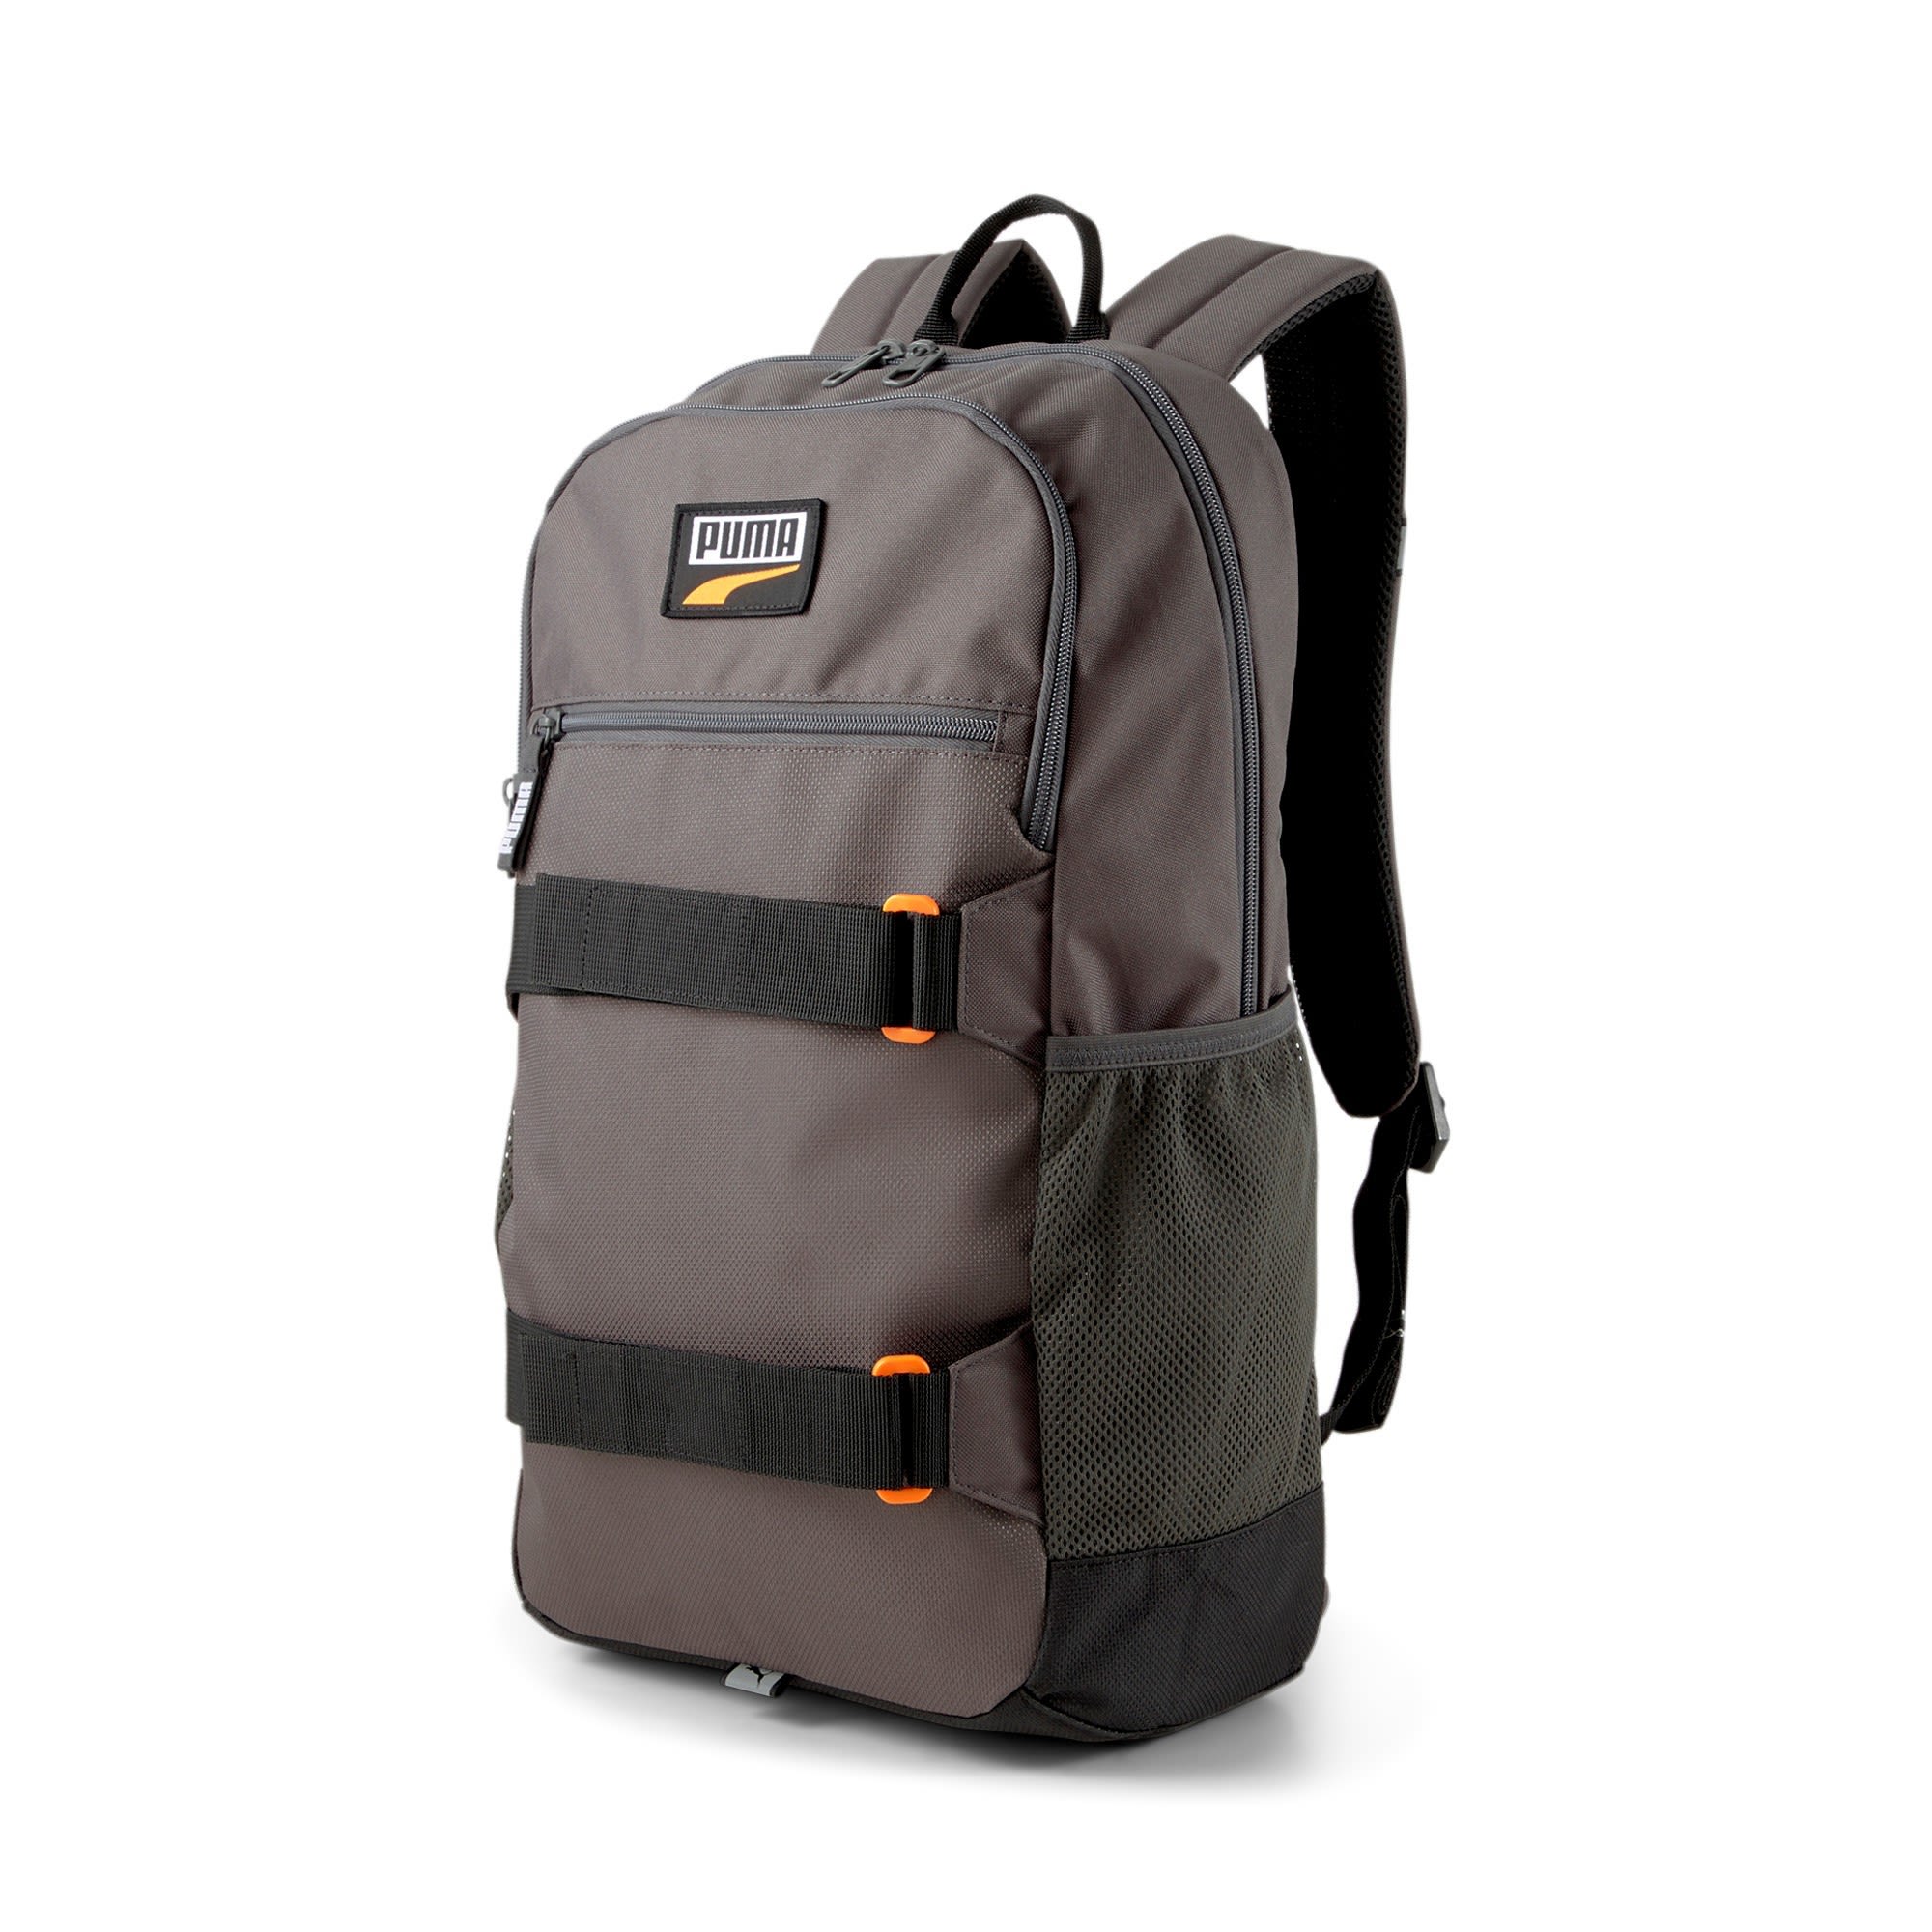 Puma Deck Backpack Grau- Daypacks- Grsse One Size - Farbe Dark Shadow